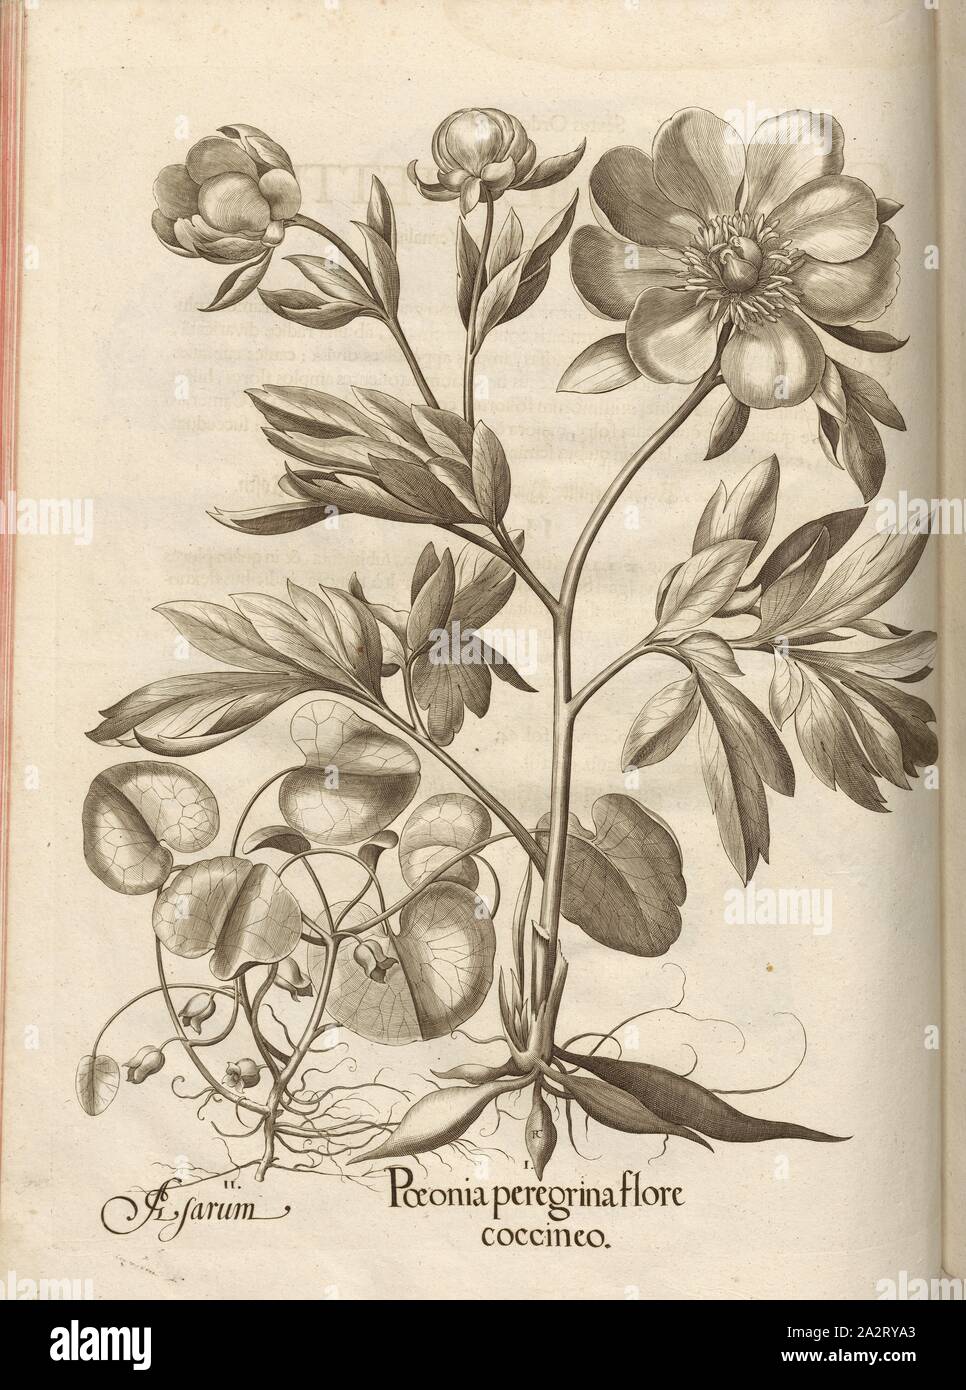 Physarum, Poeonia peregrina coccineo flower, Slime-fungus, copperplate engraving, p. 226, Besler, Basilius; Jungermann, Ludwig, 1713, Basilius Besler: Hortus Eystettensis (...). Nürnberg, 1713 Stock Photo